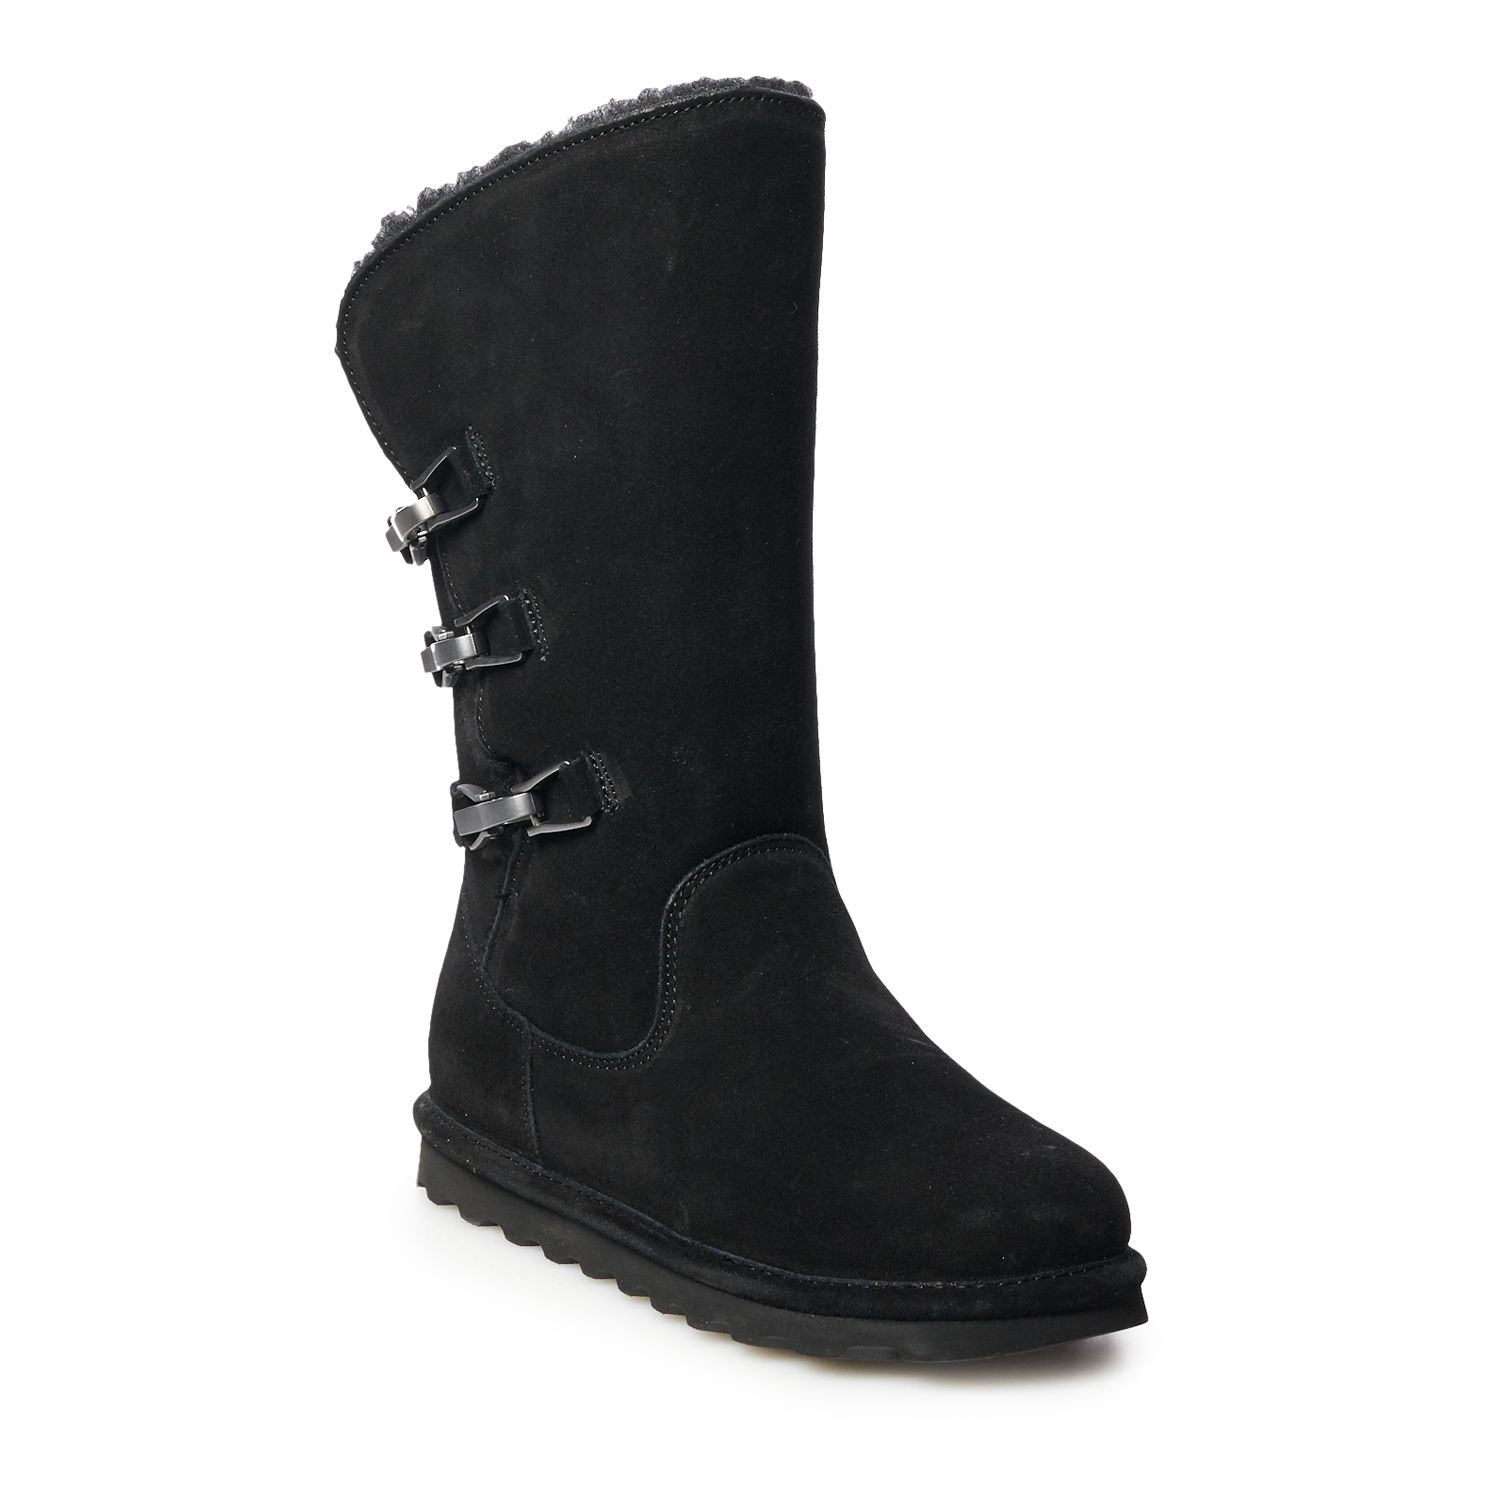 bearpaw women's phylly winter boot